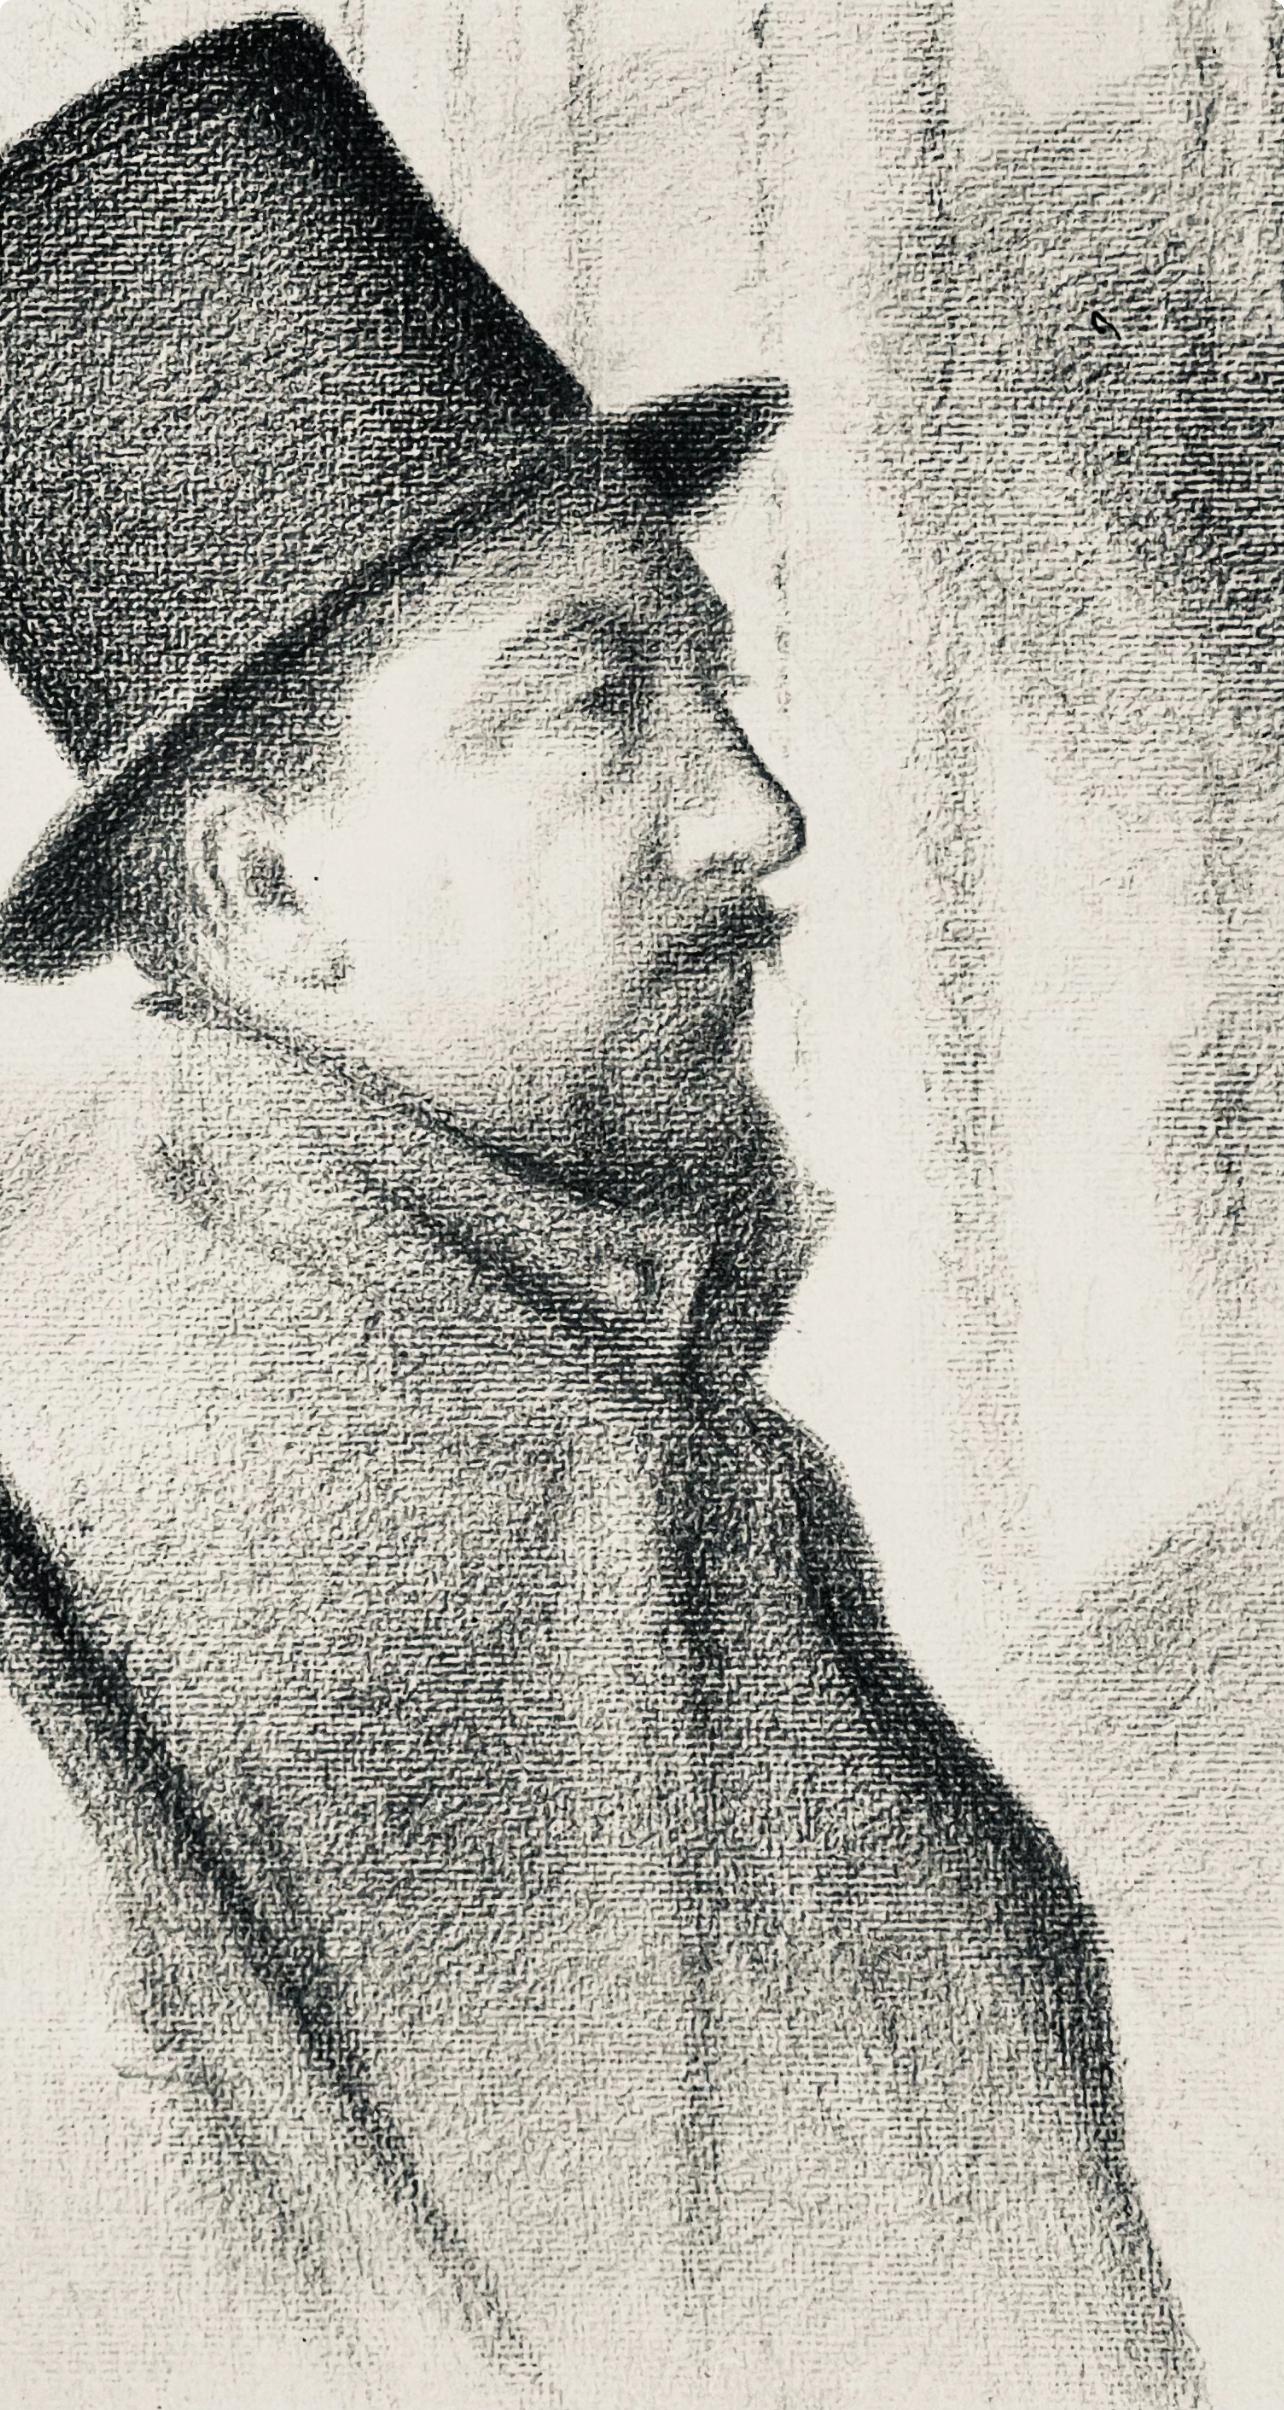 Seurat, Porträt von Paul Signac, Seurat (nach) (Impressionismus), Print, von Georges Seurat